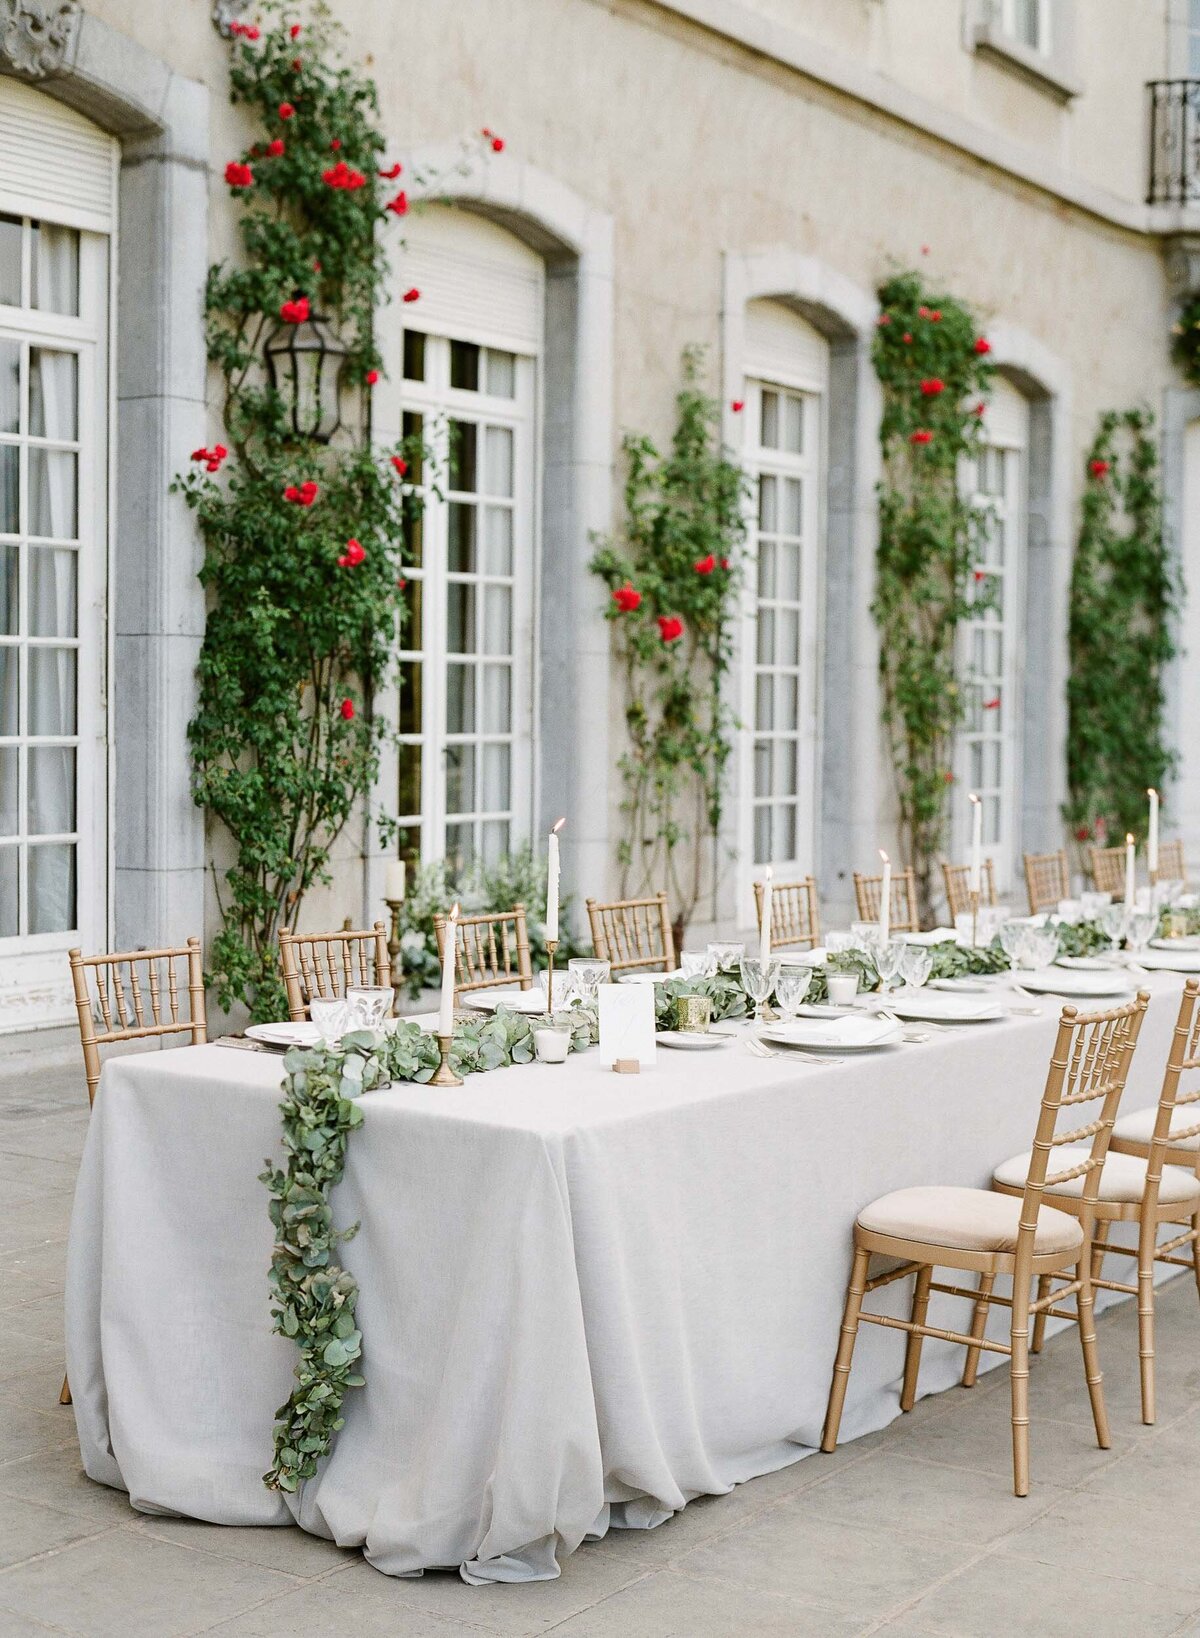 37-Alexandra-Vonk-photography-Chateau-de-la-hulpe-wedding-dinner